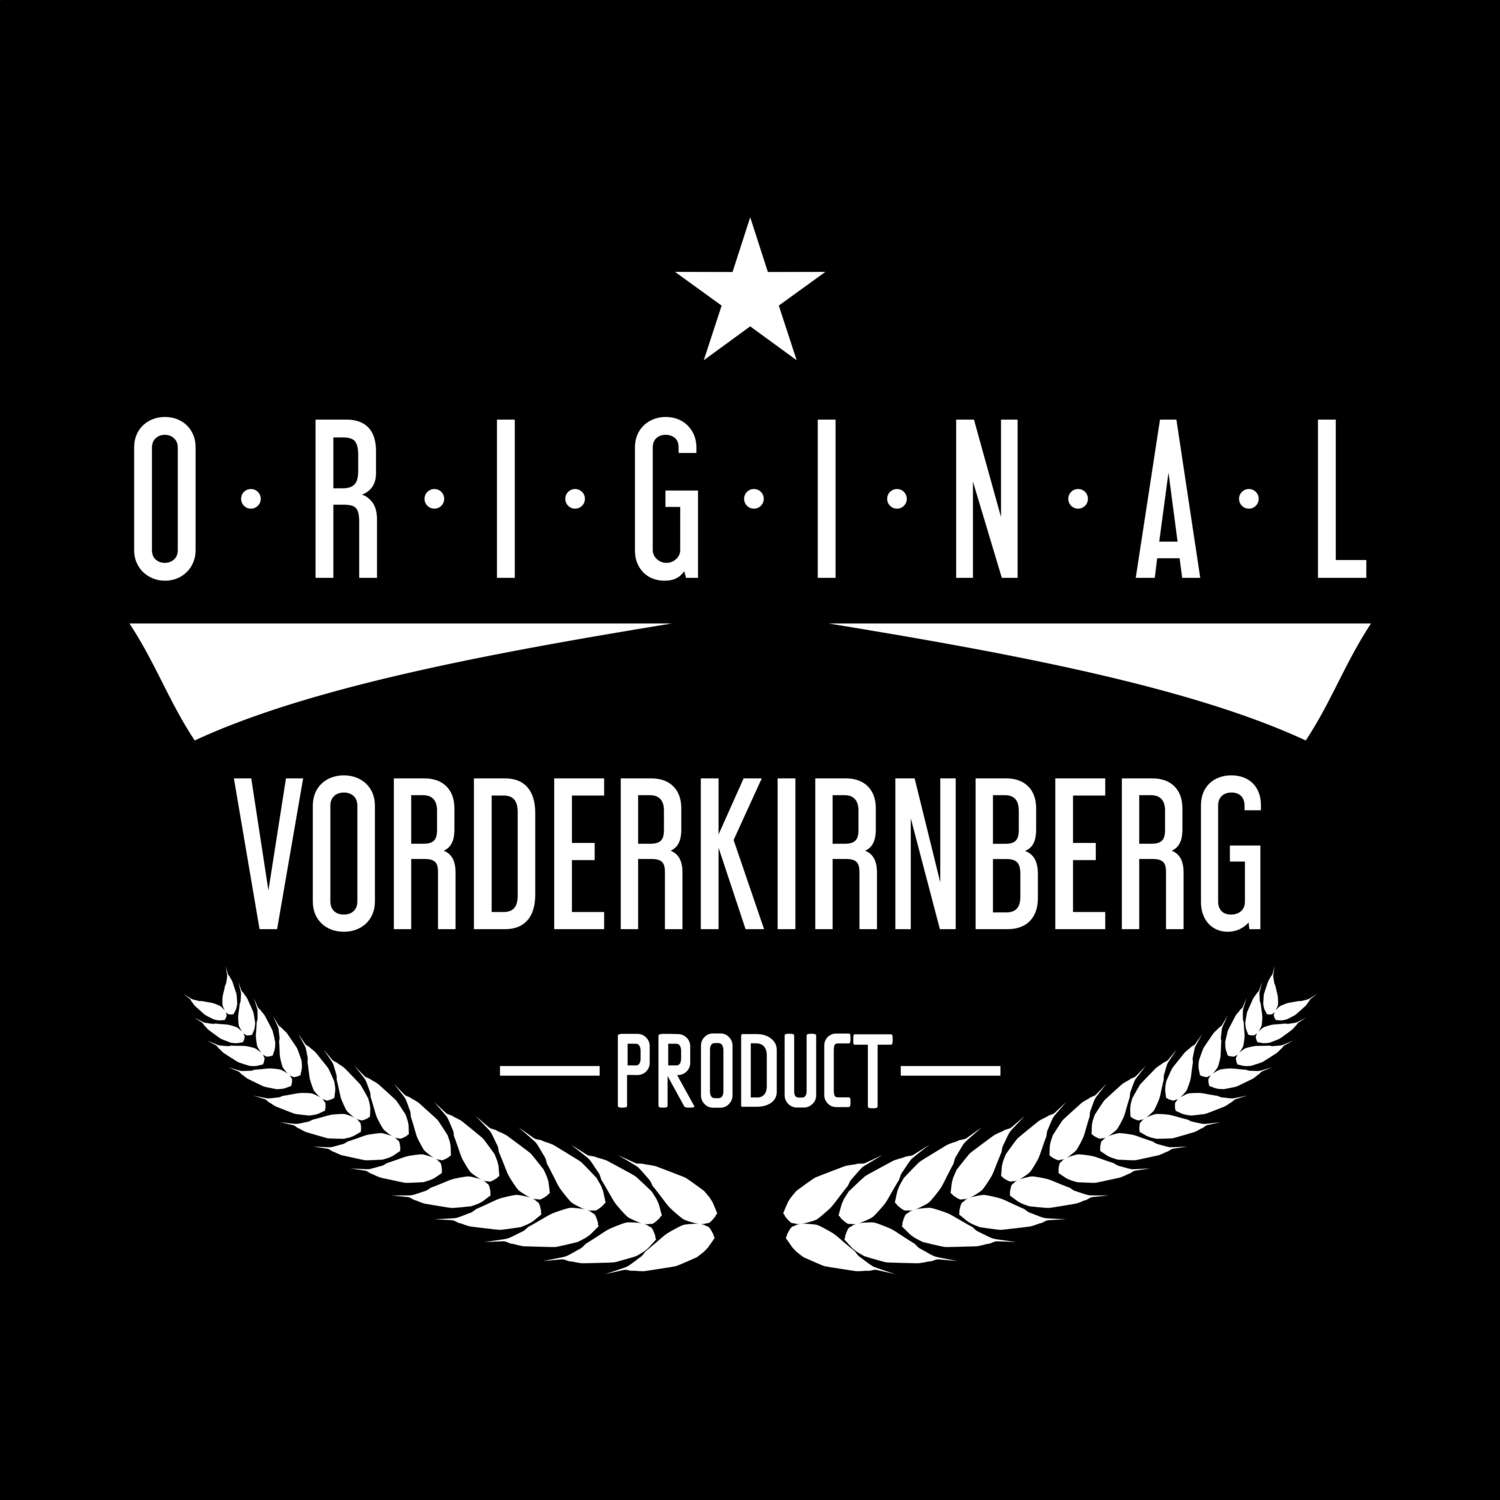 Vorderkirnberg T-Shirt »Original Product«